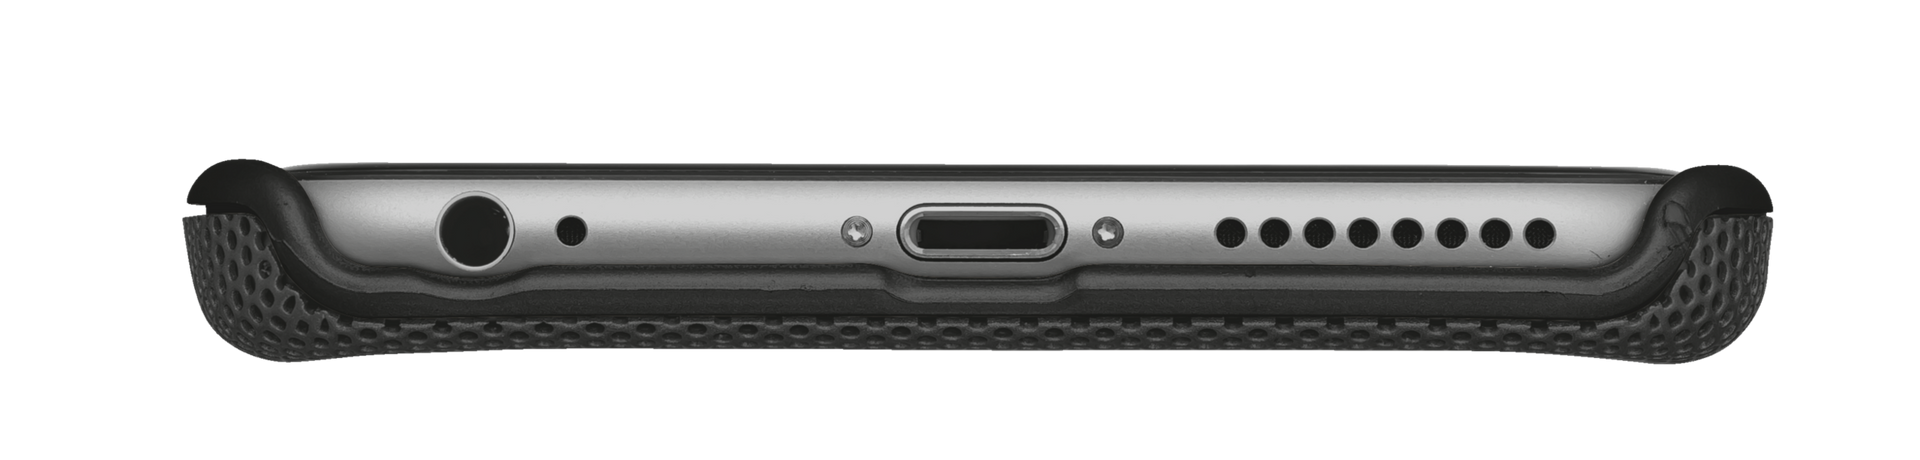 Endura Grip & Protection case for iPhone 6 Plus - black-Bottom